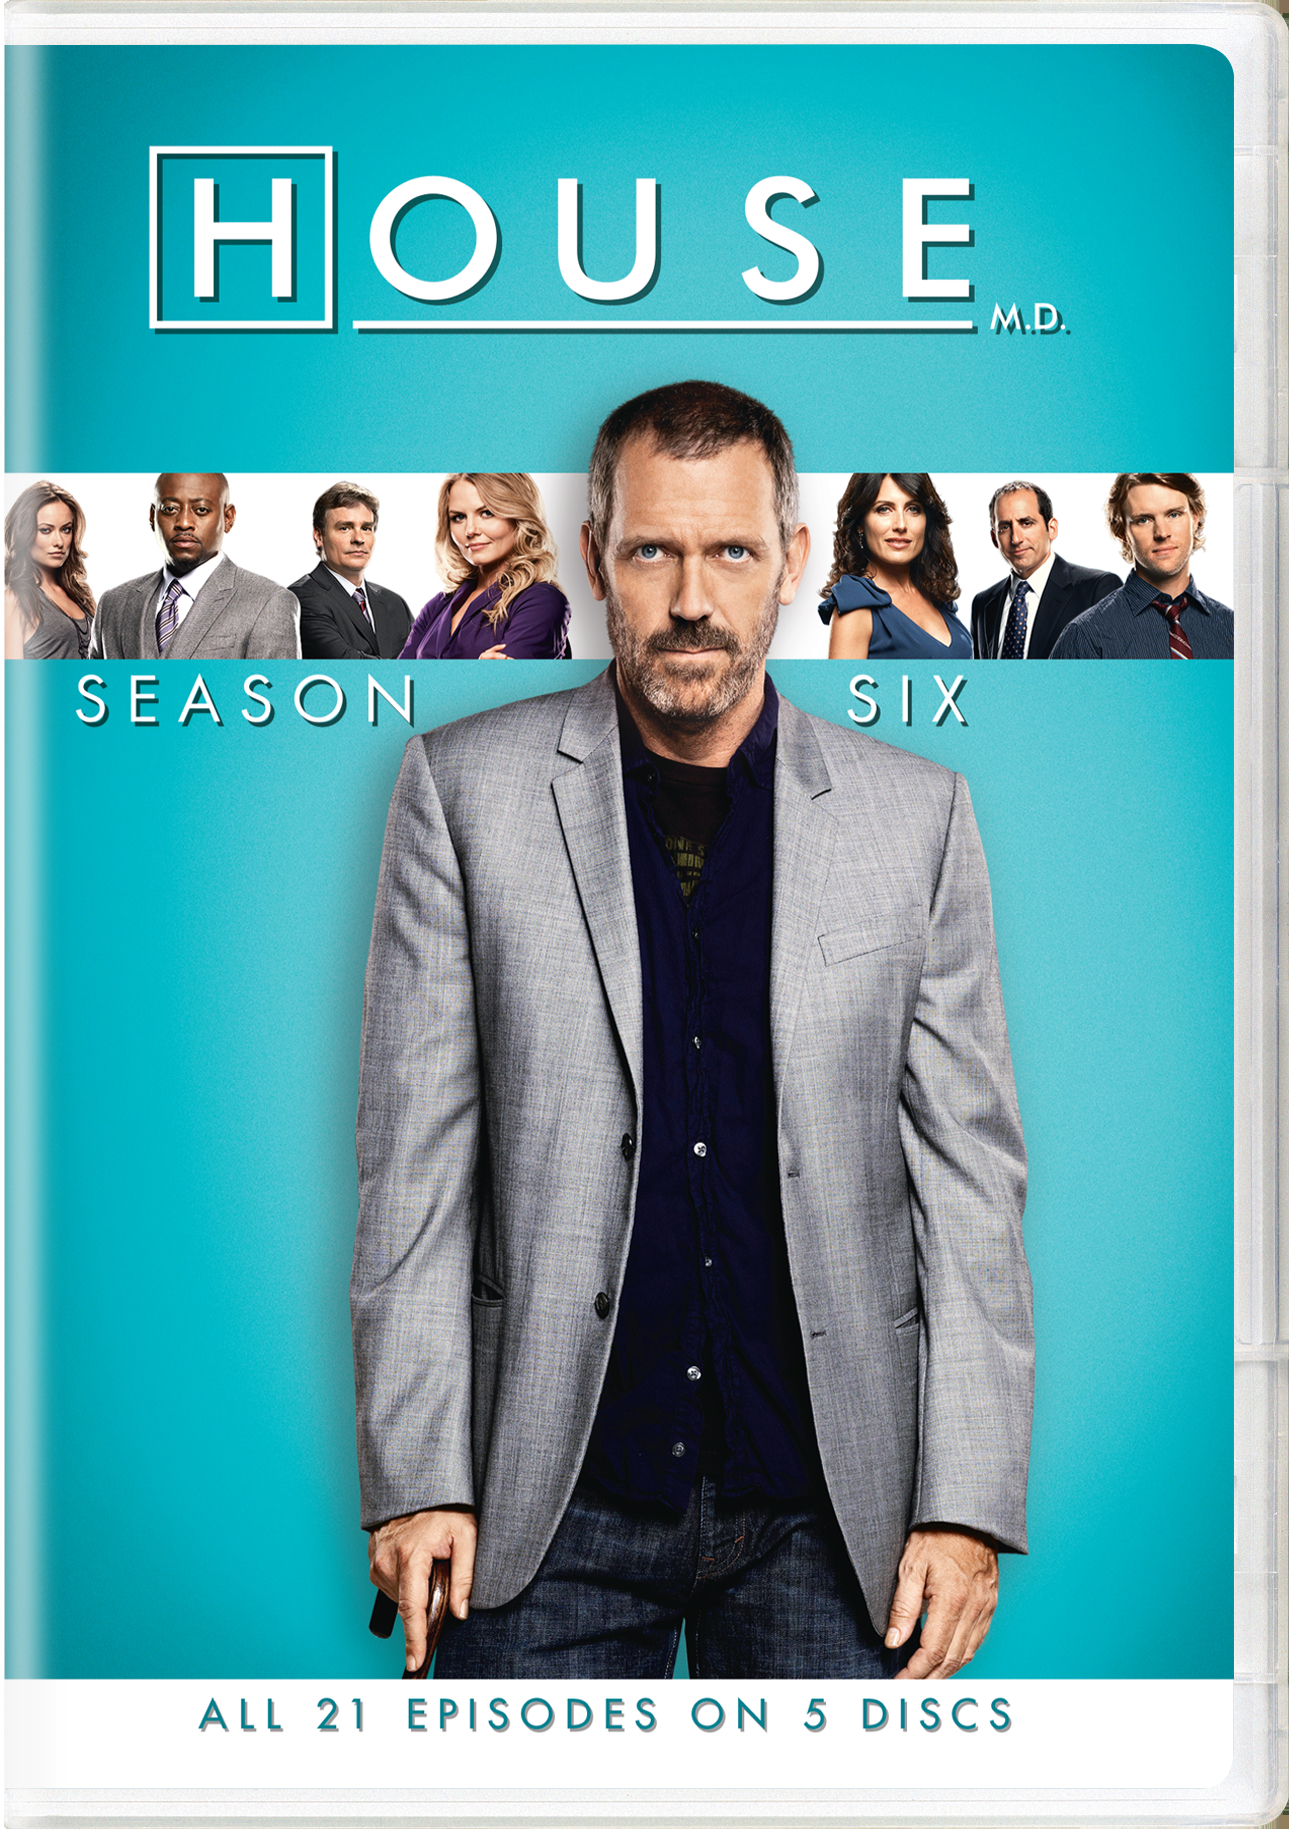 House: Season 6 - DVD [ 2010 ]  - Drama Television On DVD - TV Shows On GRUV